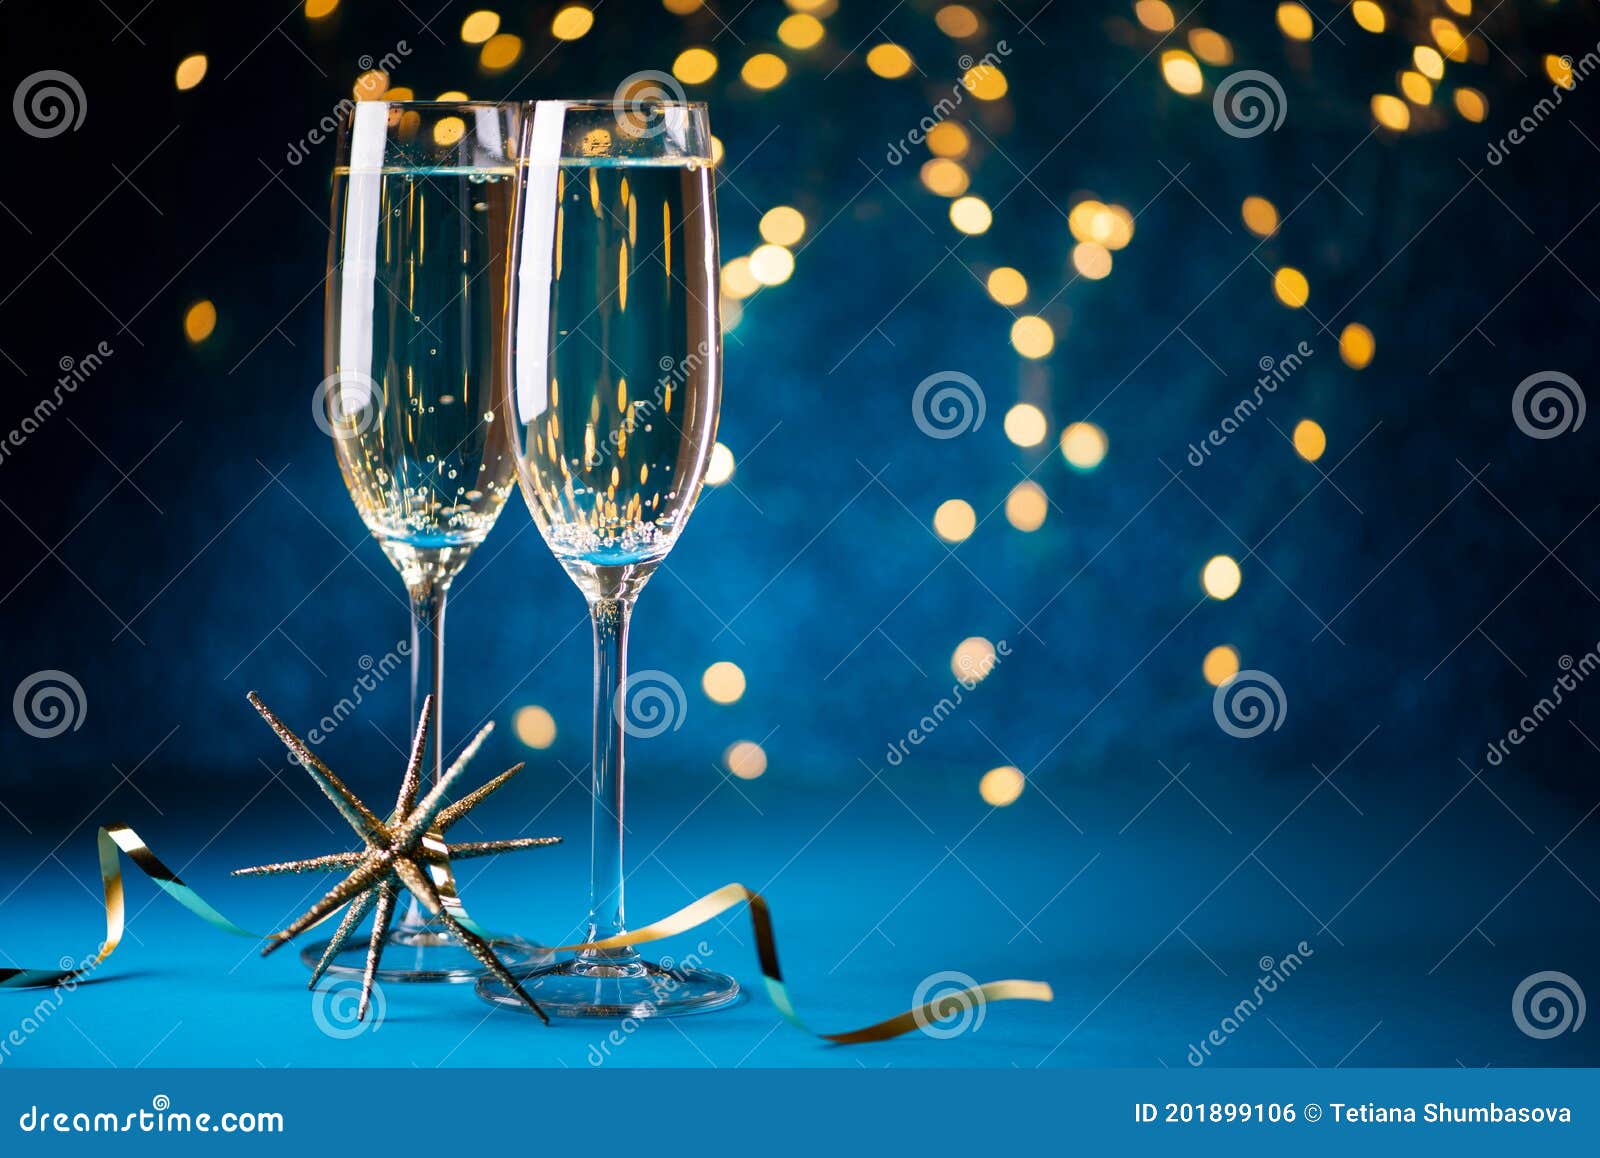 https://thumbs.dreamstime.com/z/dos-copas-de-champagne-contra-el-fondo-las-luces-del-bokeh-la-concepci%C3%B3n-celebraci%C3%B3n-a%C3%B1o-nuevo-201899106.jpg